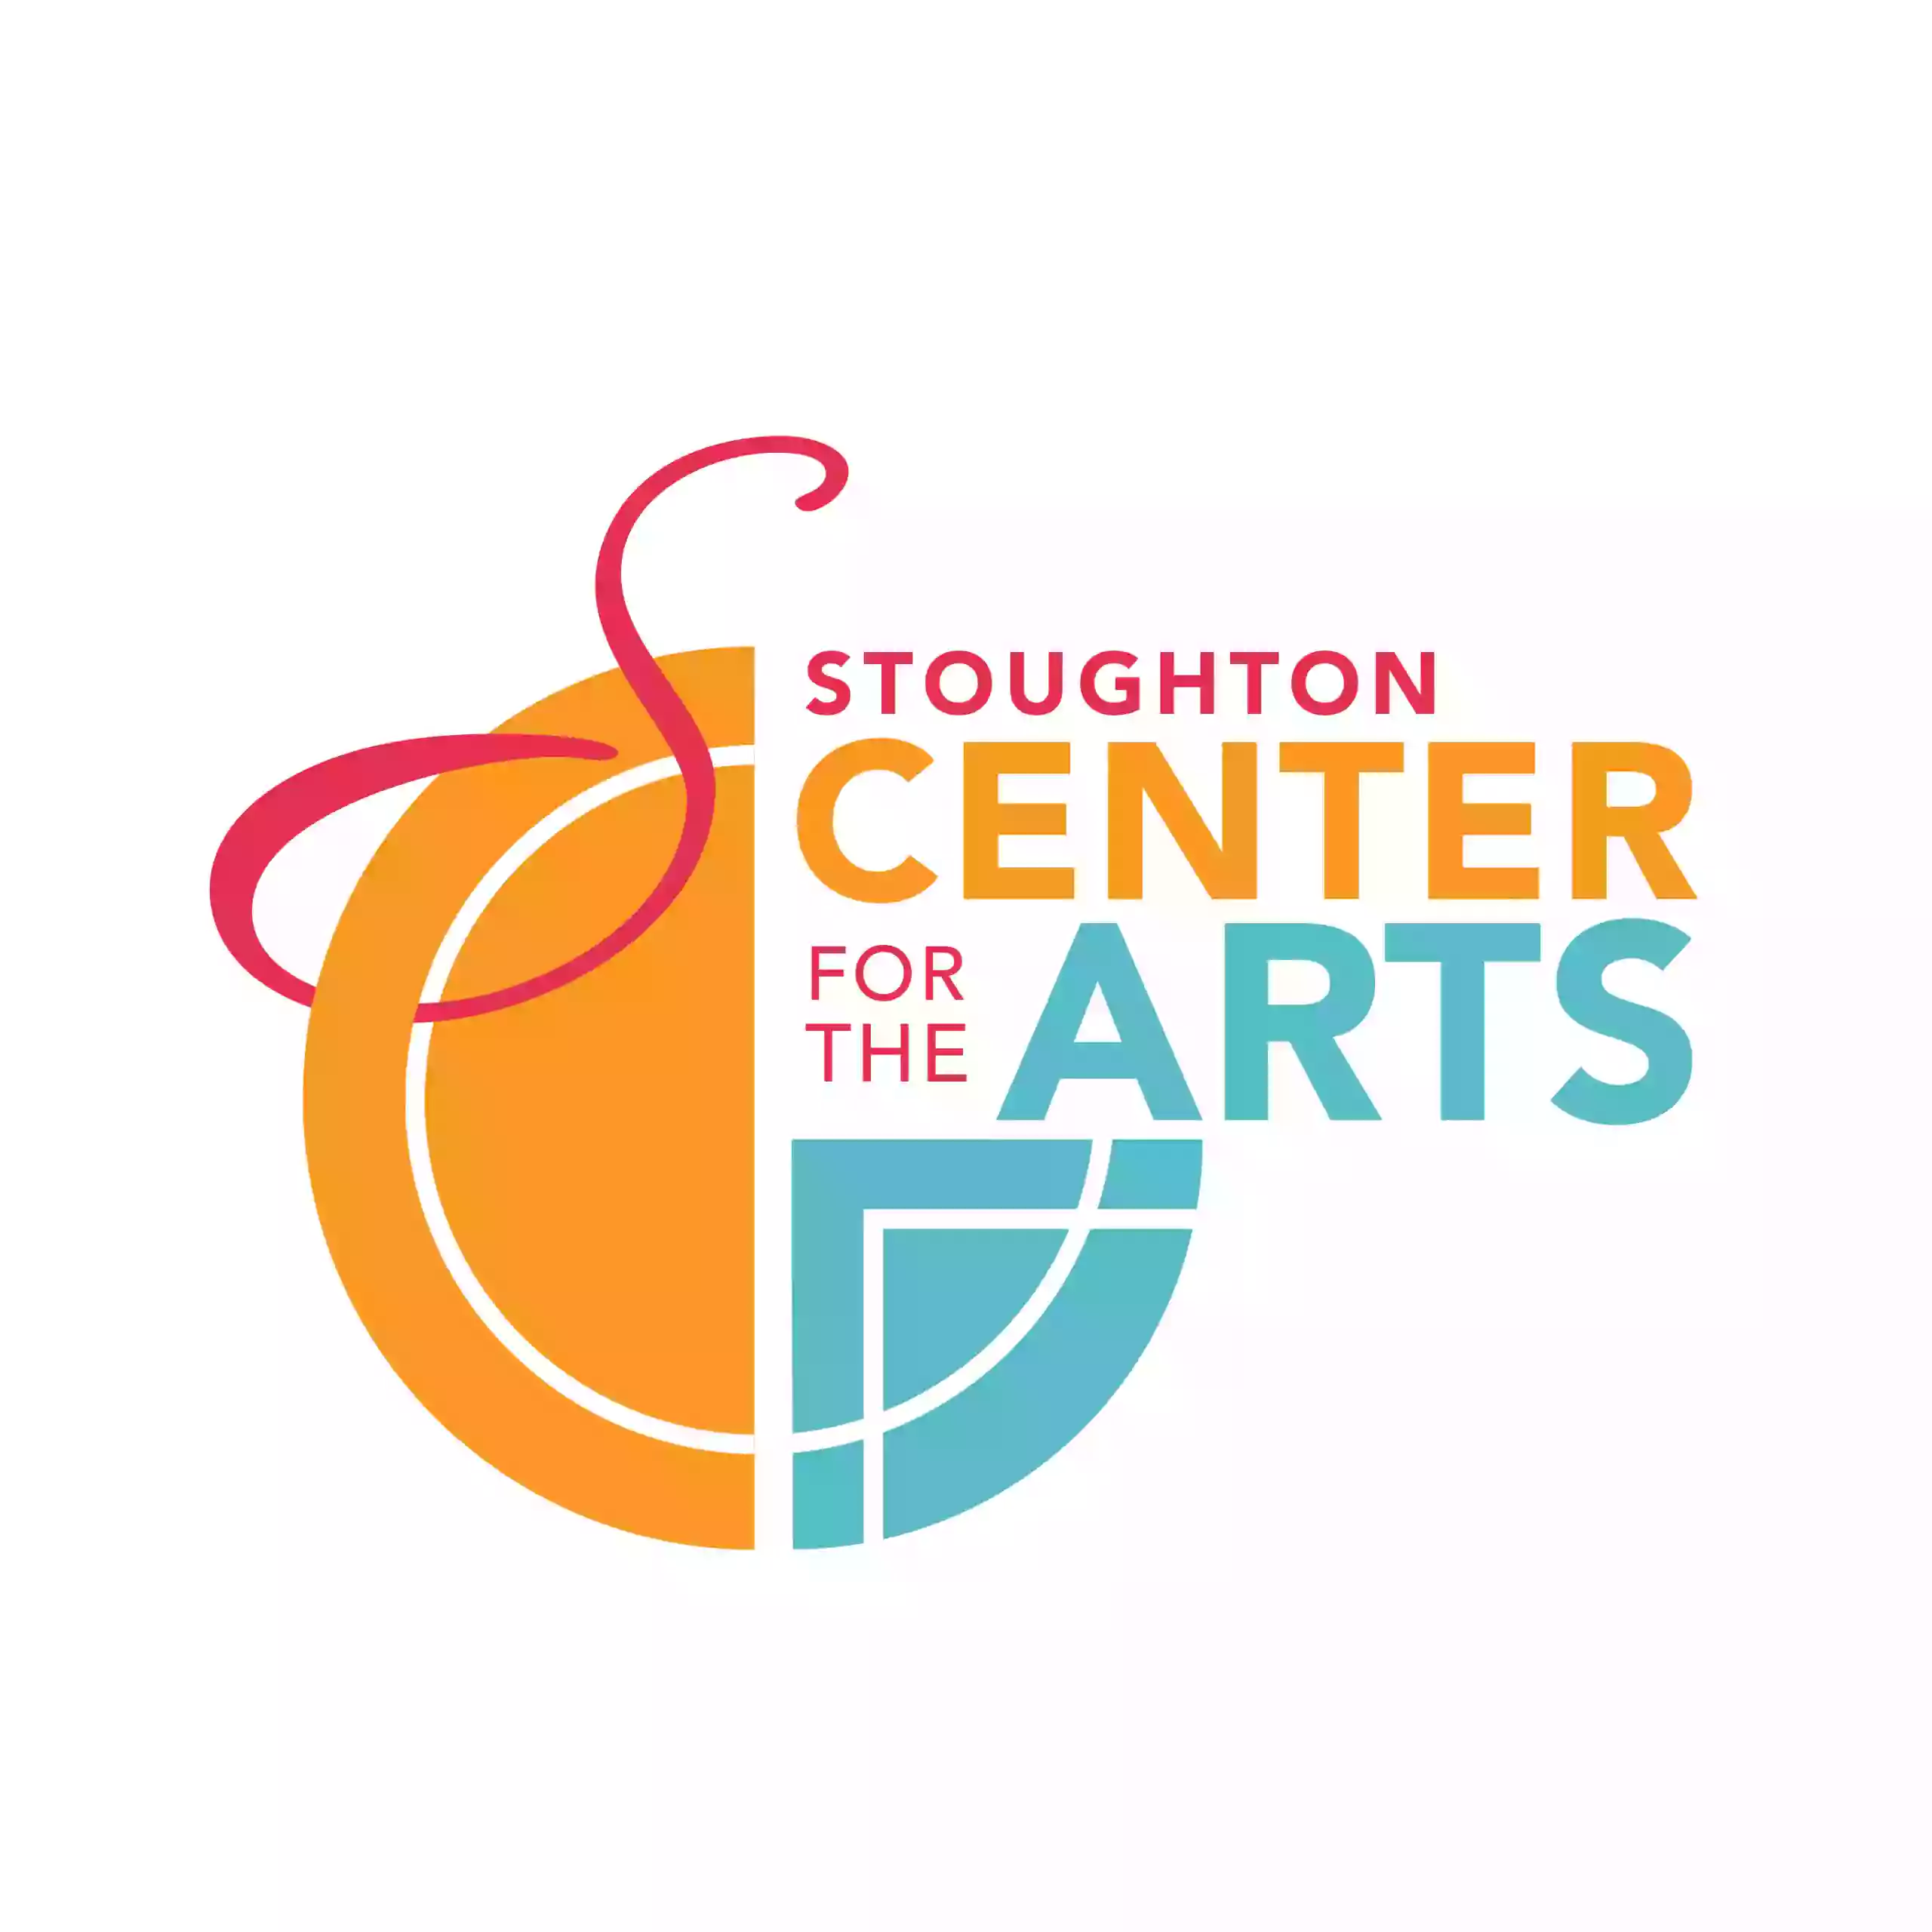 Stoughton Center for the Arts